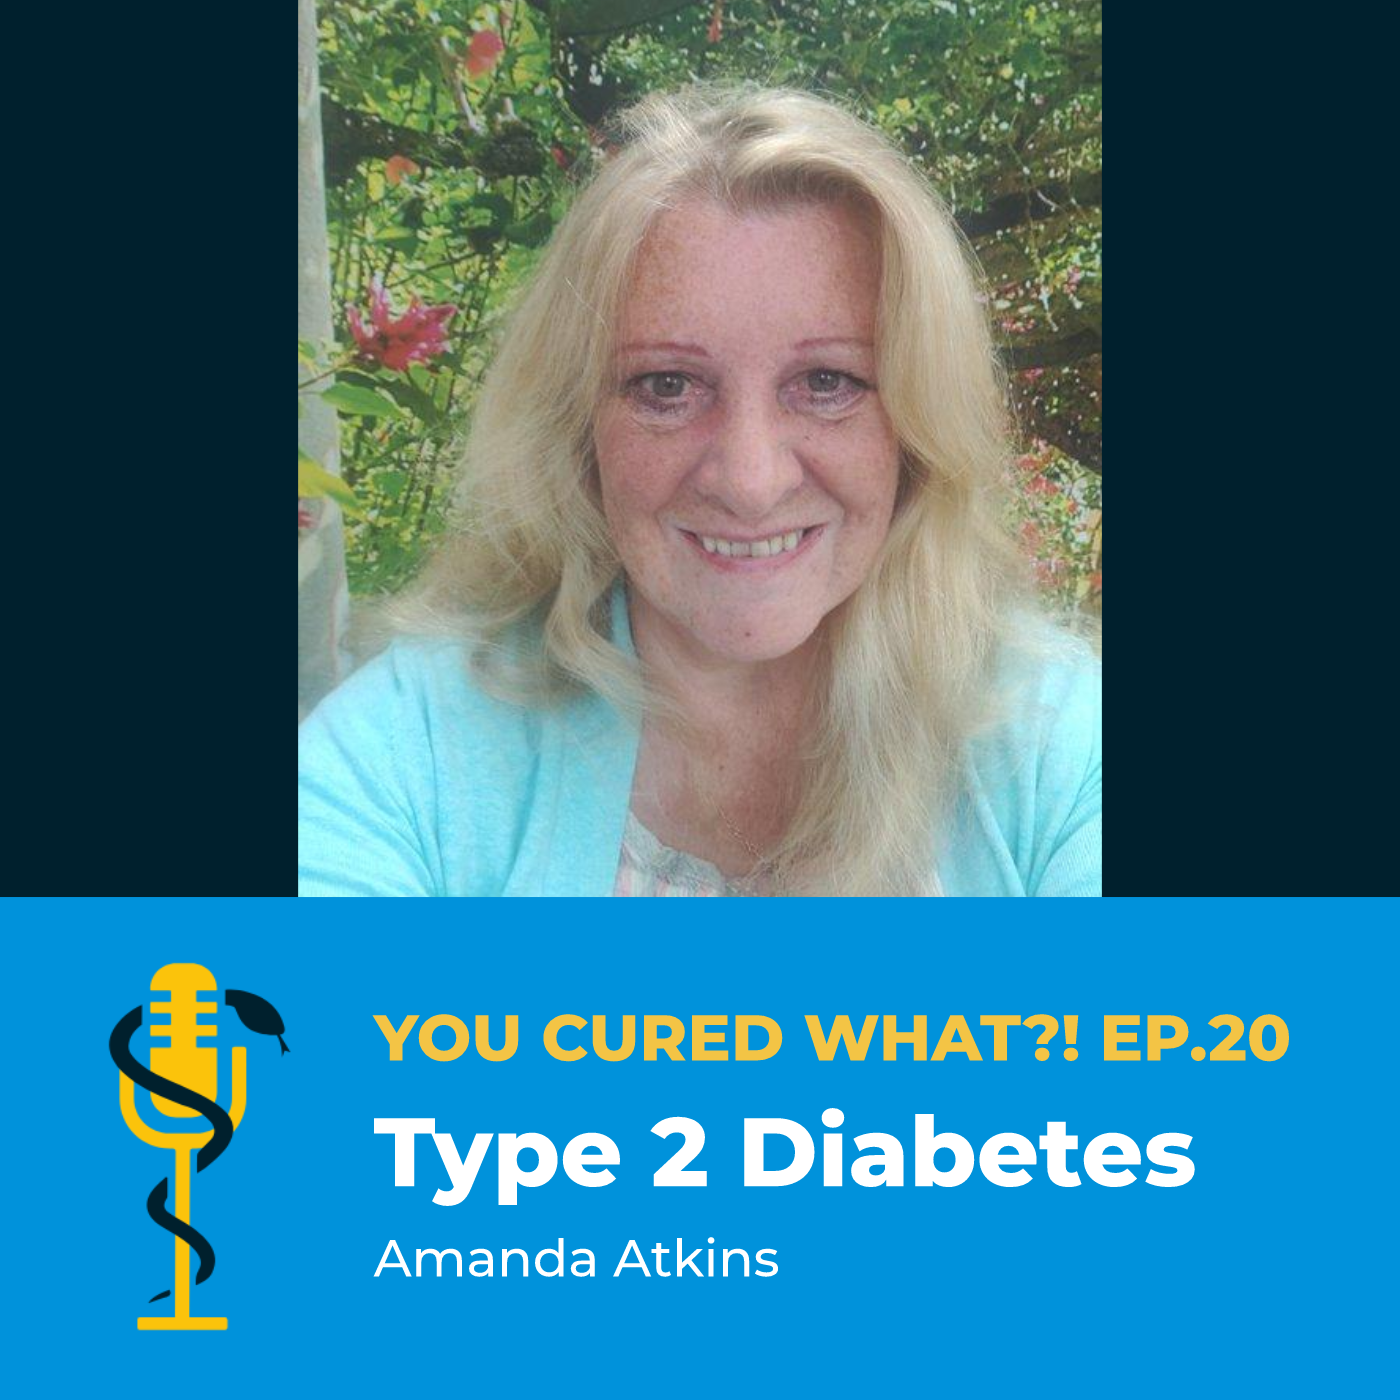 Ep.20: Type 2 Diabetes with Amanda Atkins